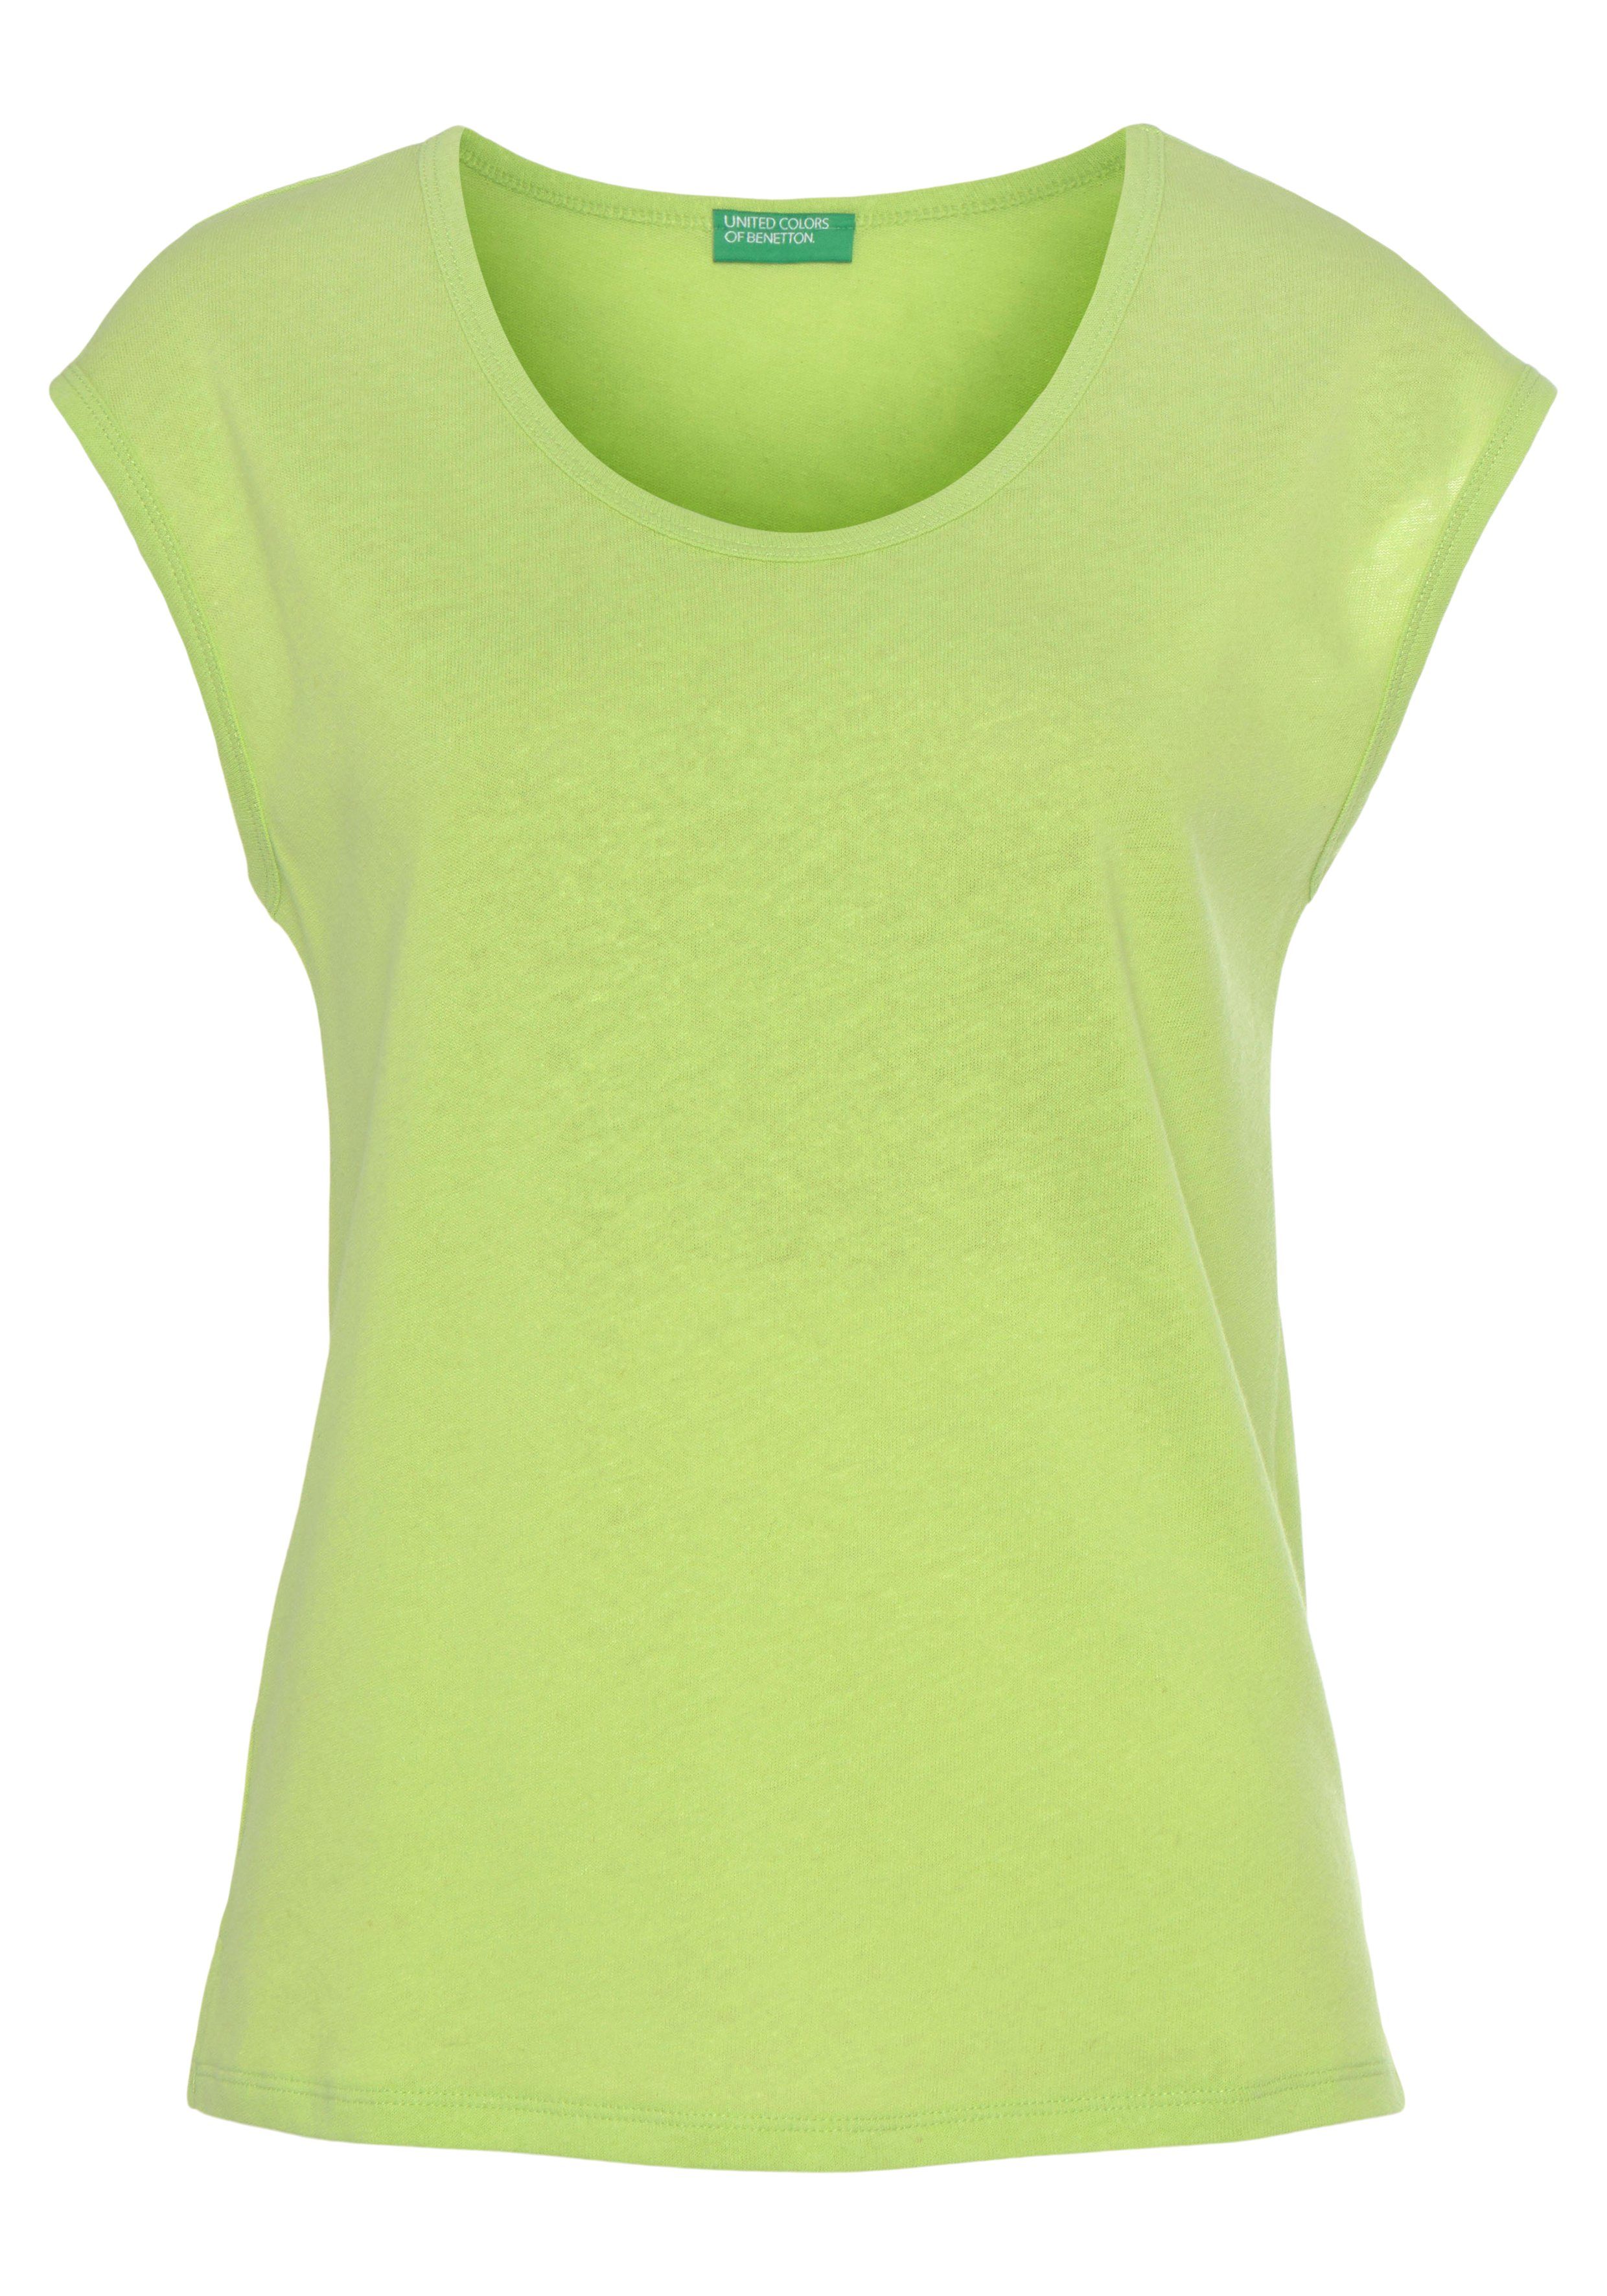 United Colors of Benetton mit T-Shirt Rundhalsausschnitt grün